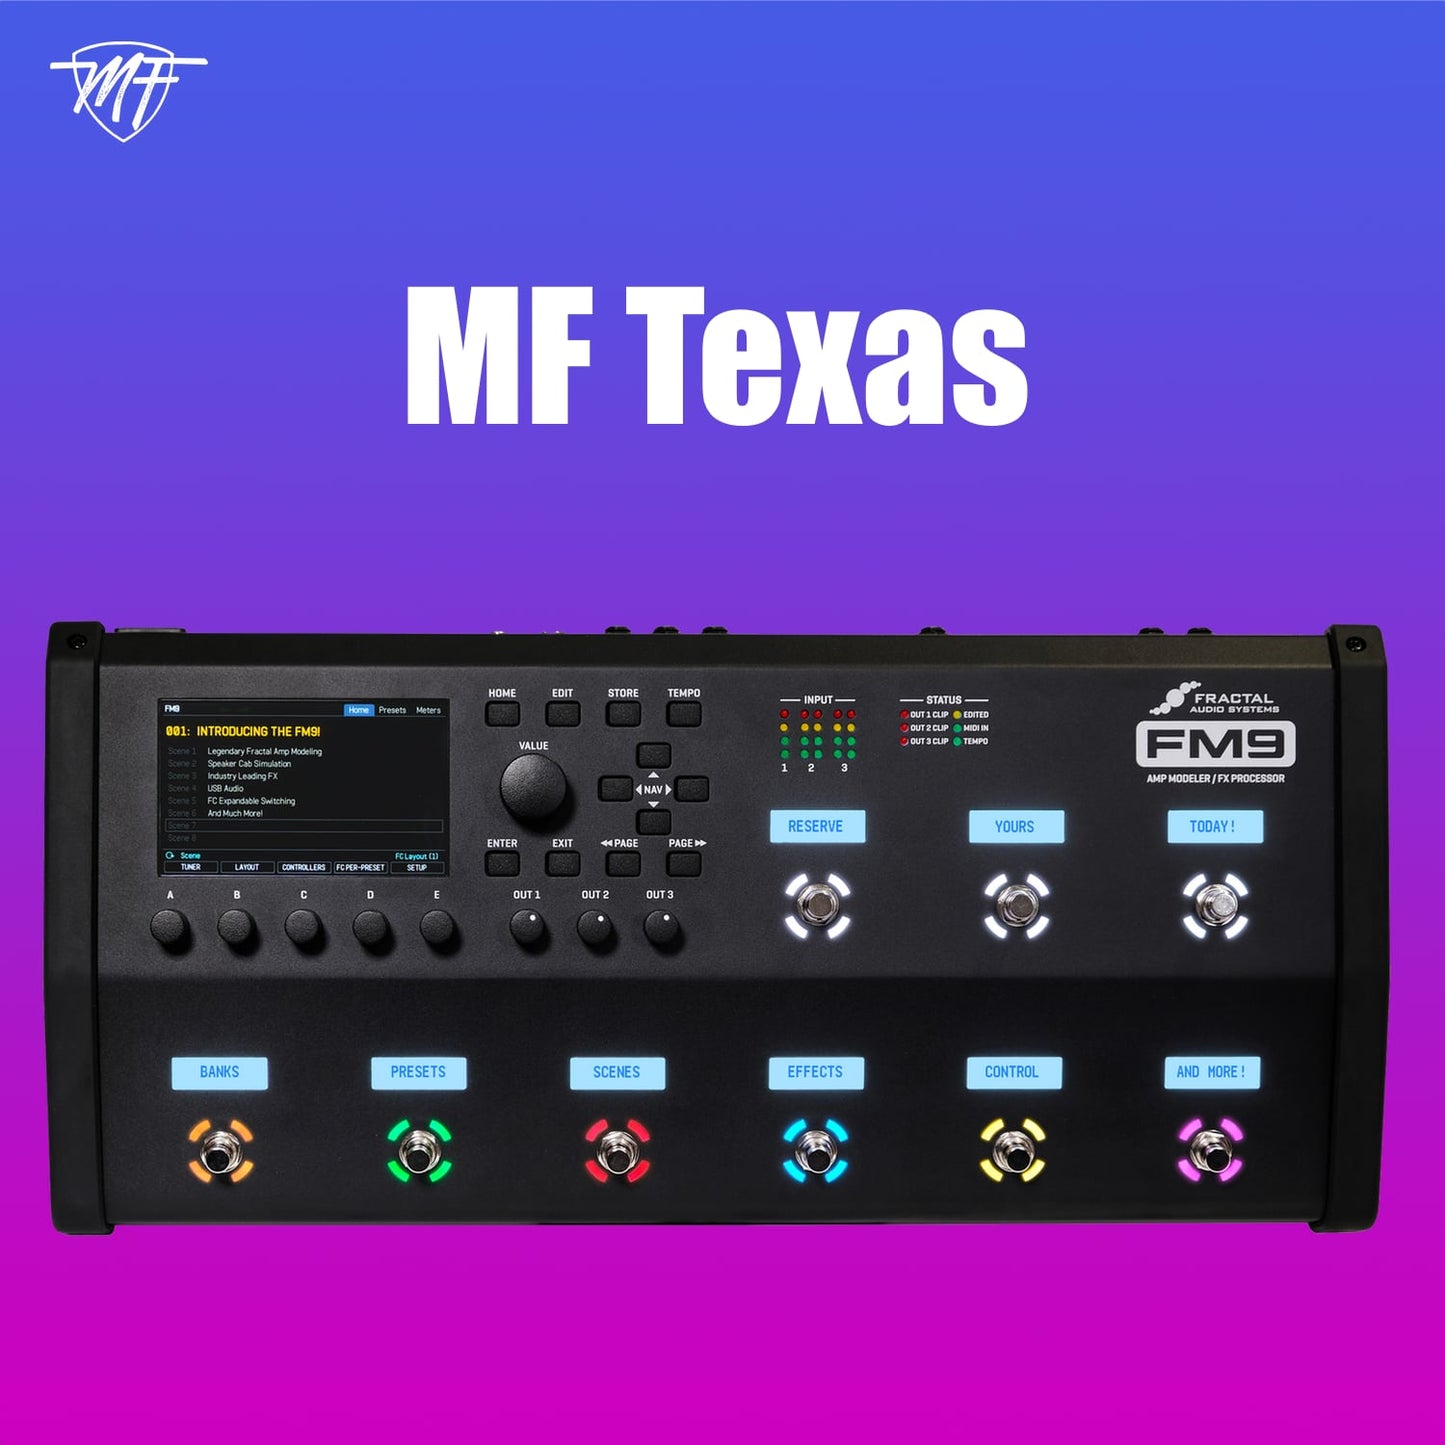 MF Texas FM9